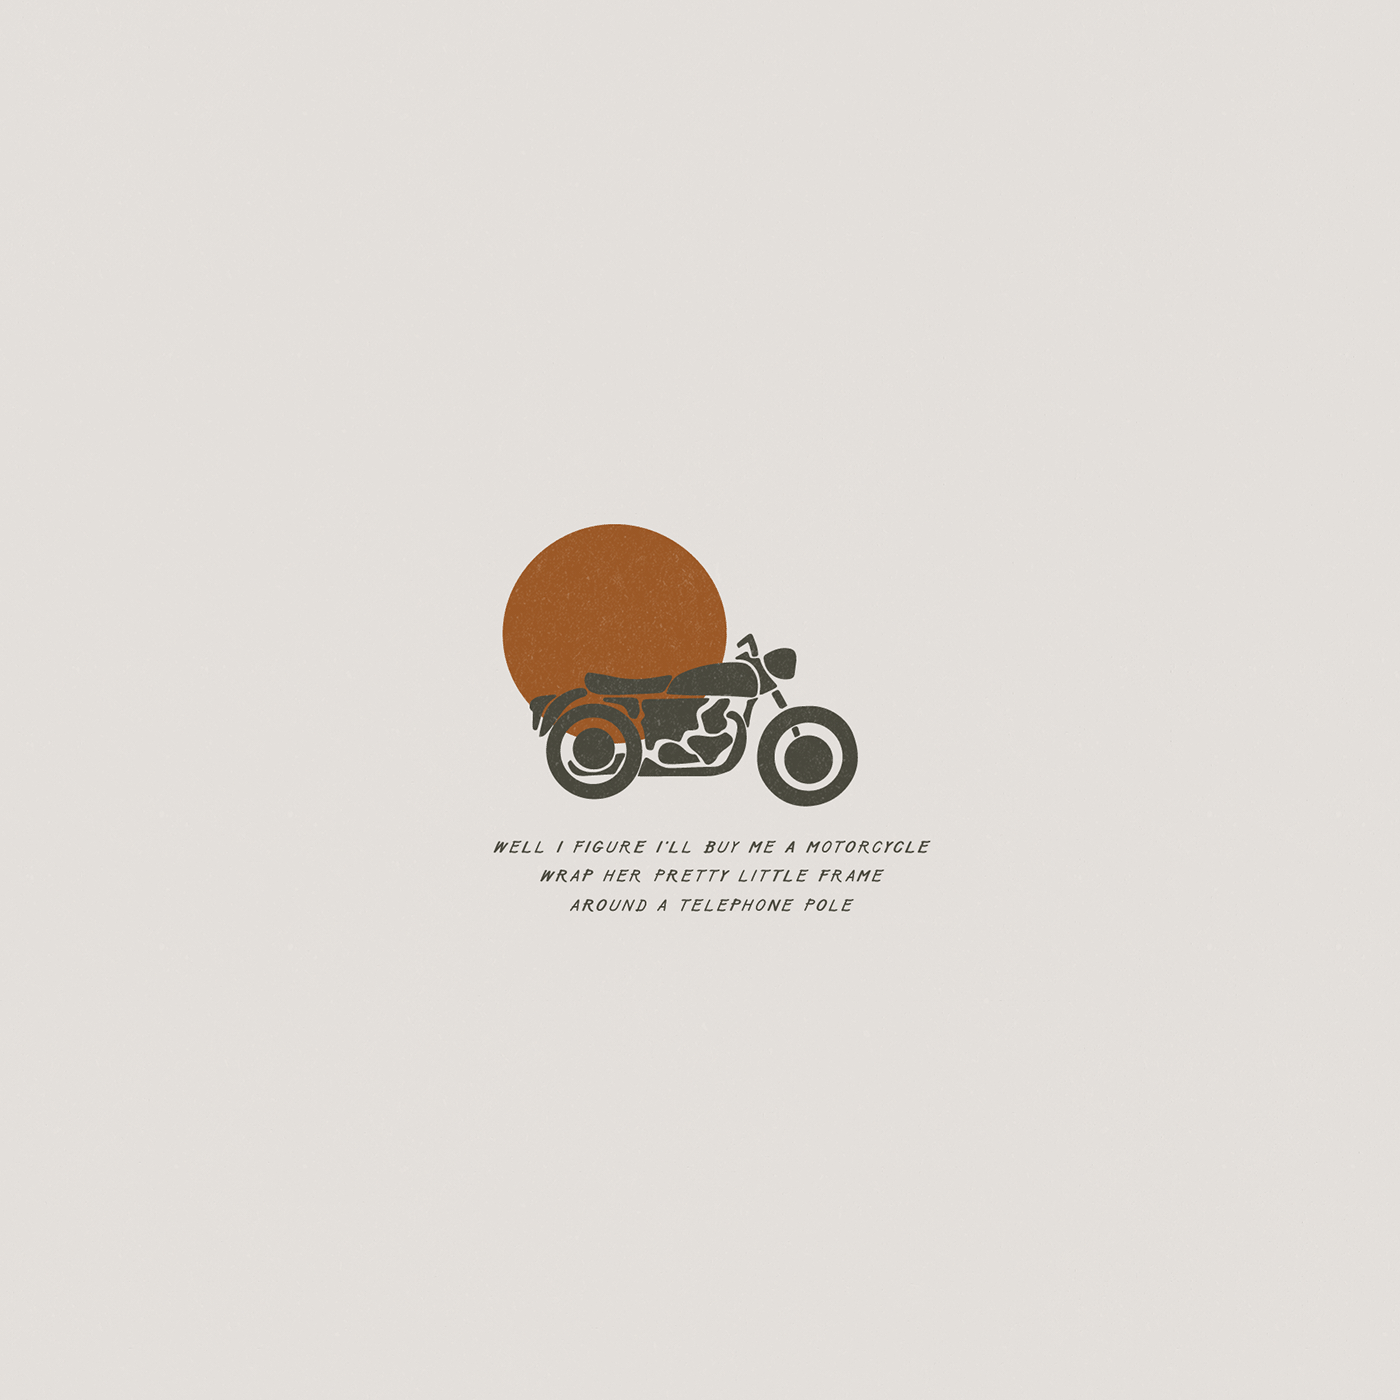 Colter Wall design ILLUSTRATION  logo Lyrics minimal minimalist motorcycle simple type design